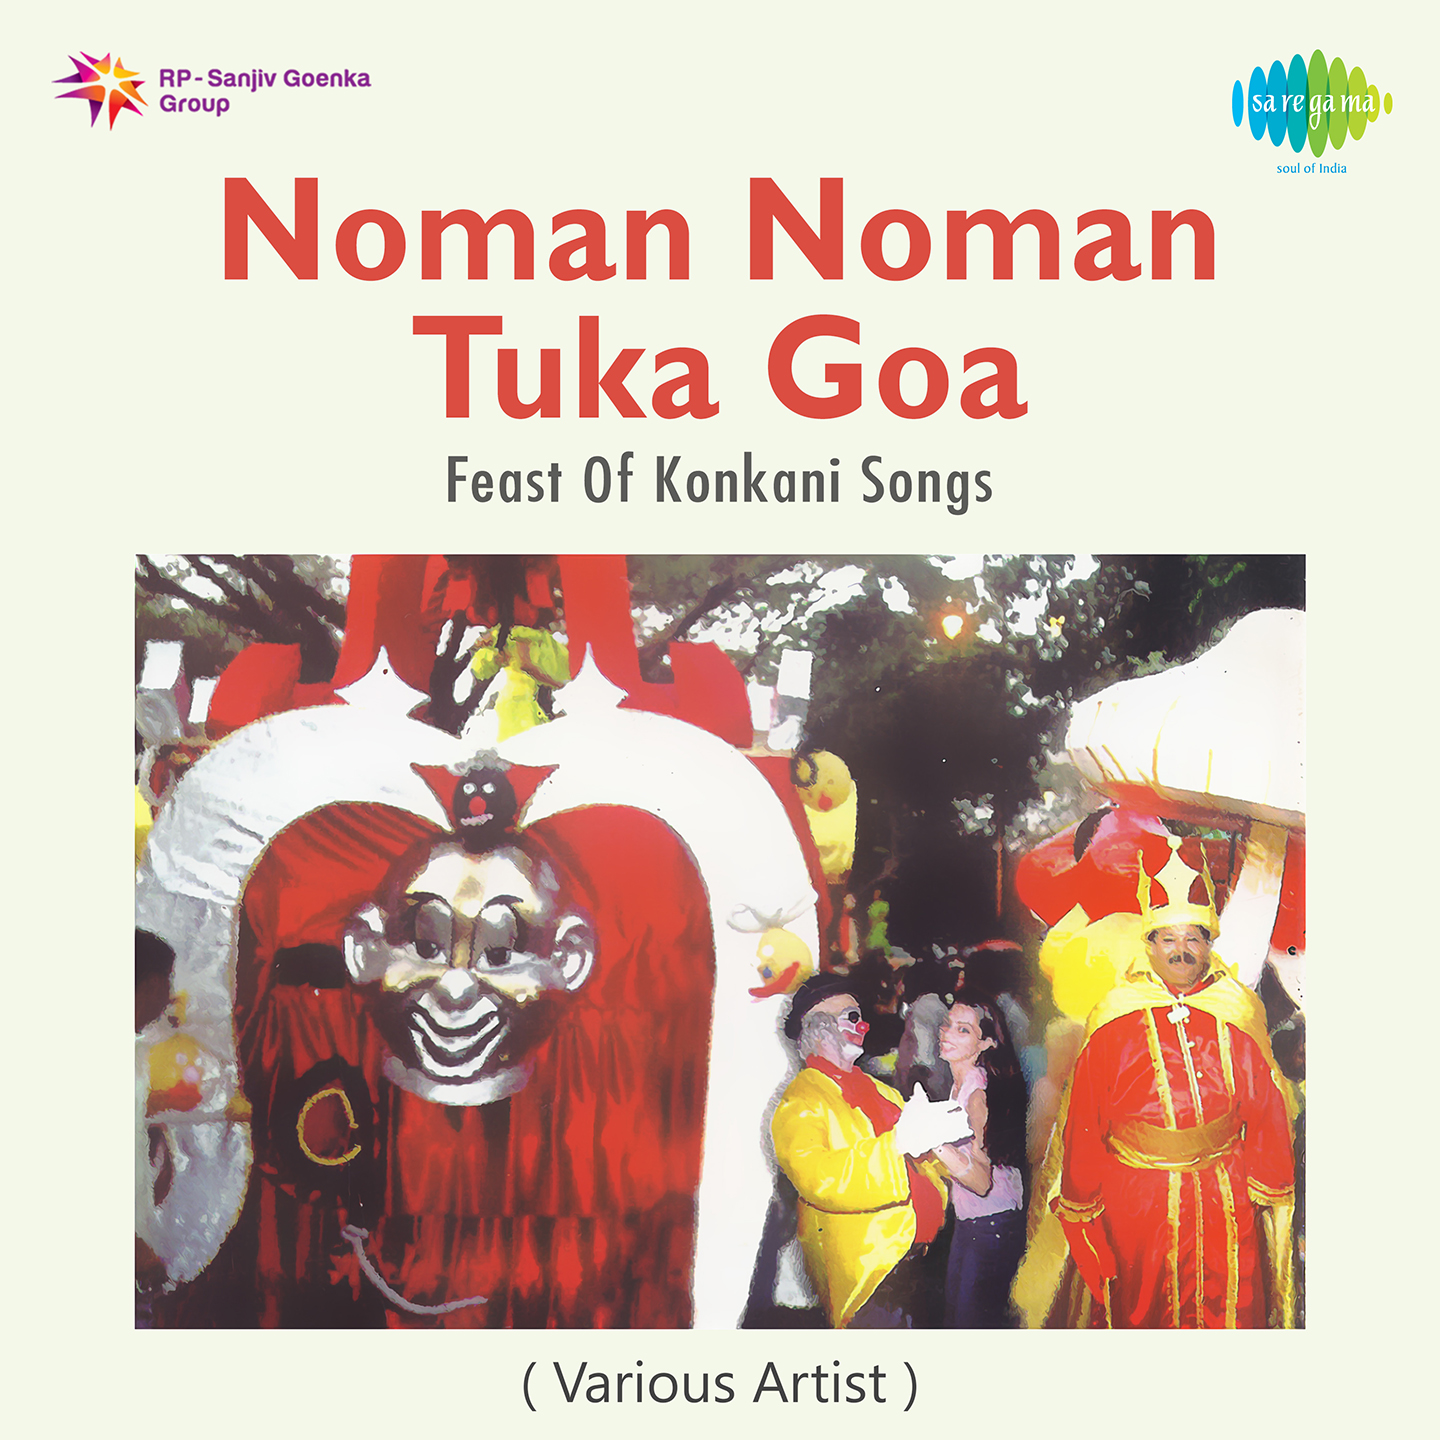 Feast Of Konkani Songs